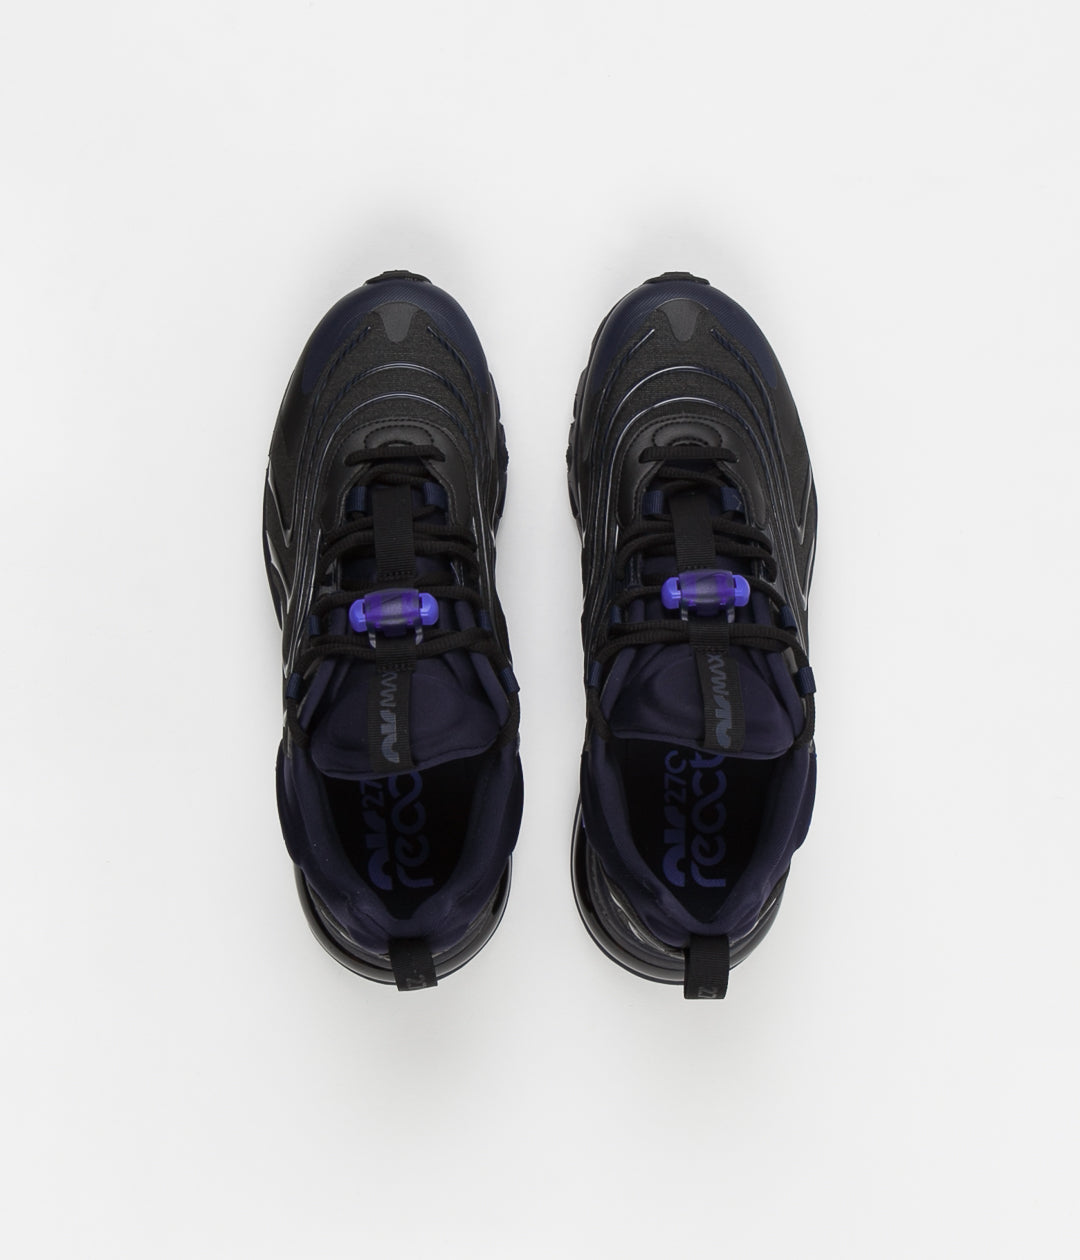 Nike Air Max 270 React ENG Black/Obisidian